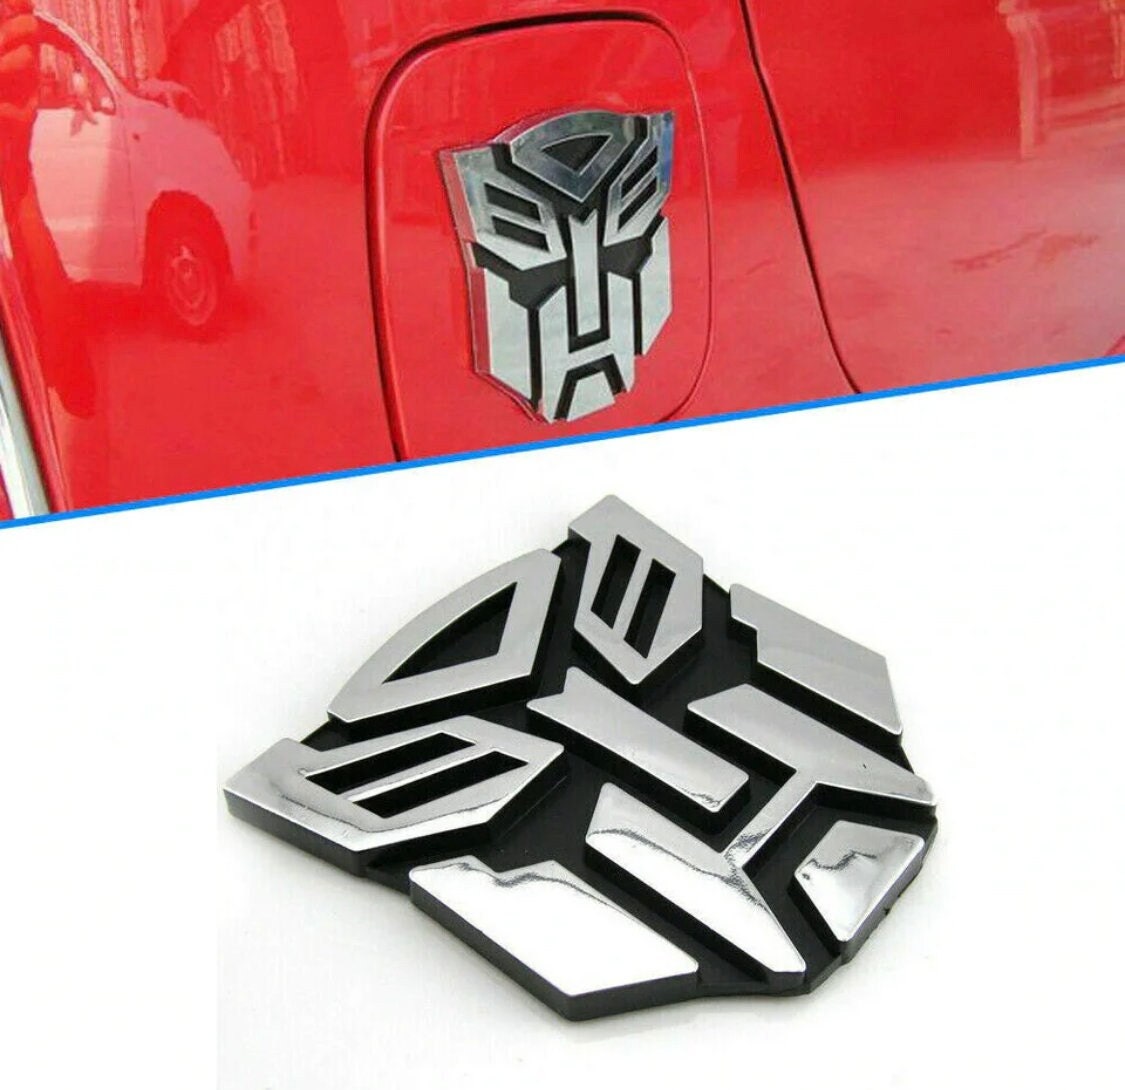  Transformers Metal Car Sticker,Autobot Auto Emblem